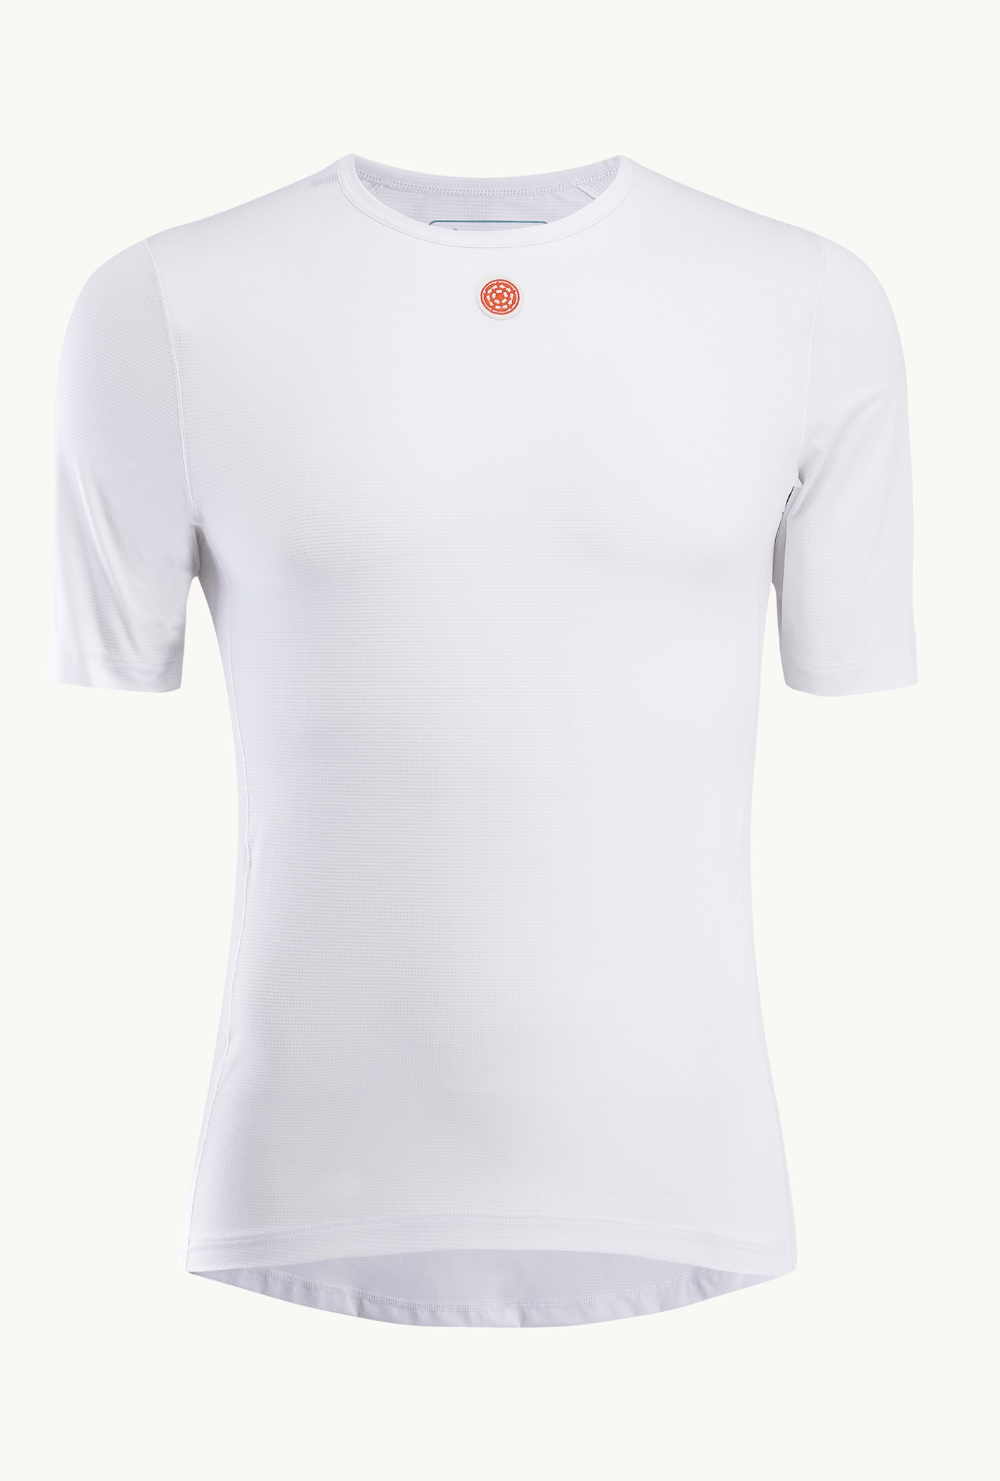 Pearson 1860  Touch Base - Short Sleeve Base Layer White  Medium / White